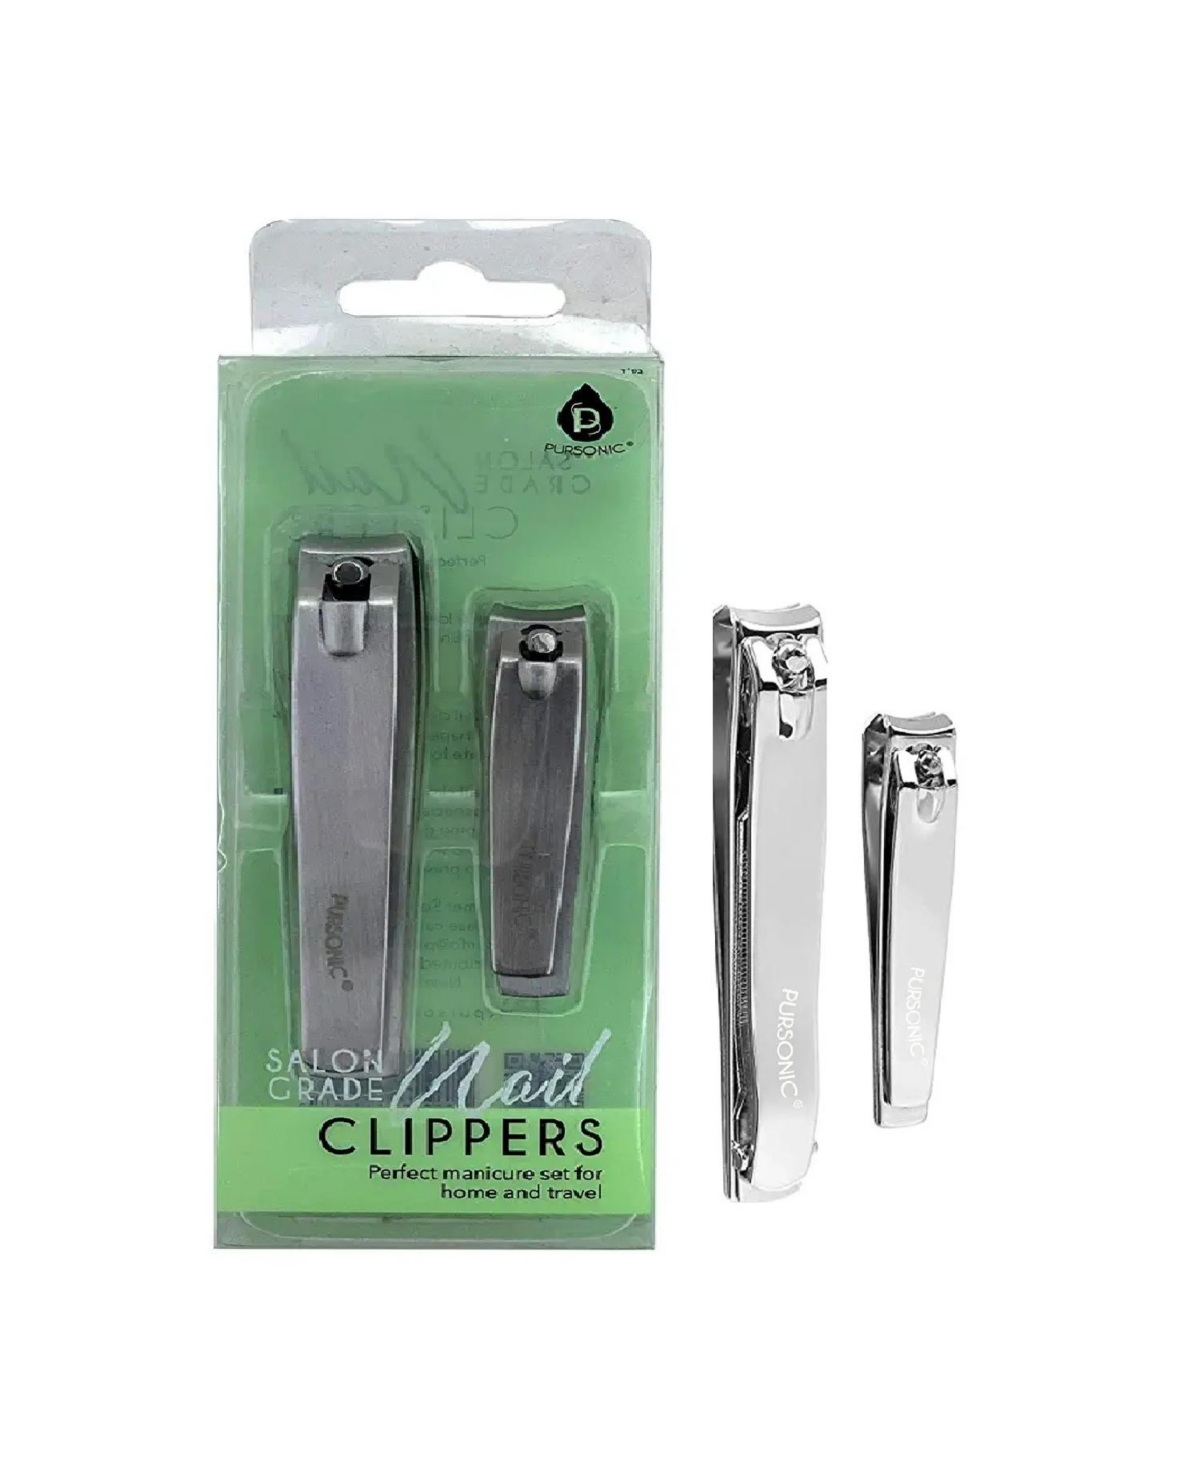 Salon Grade Premium 2 Pack Nail Clippers - Green